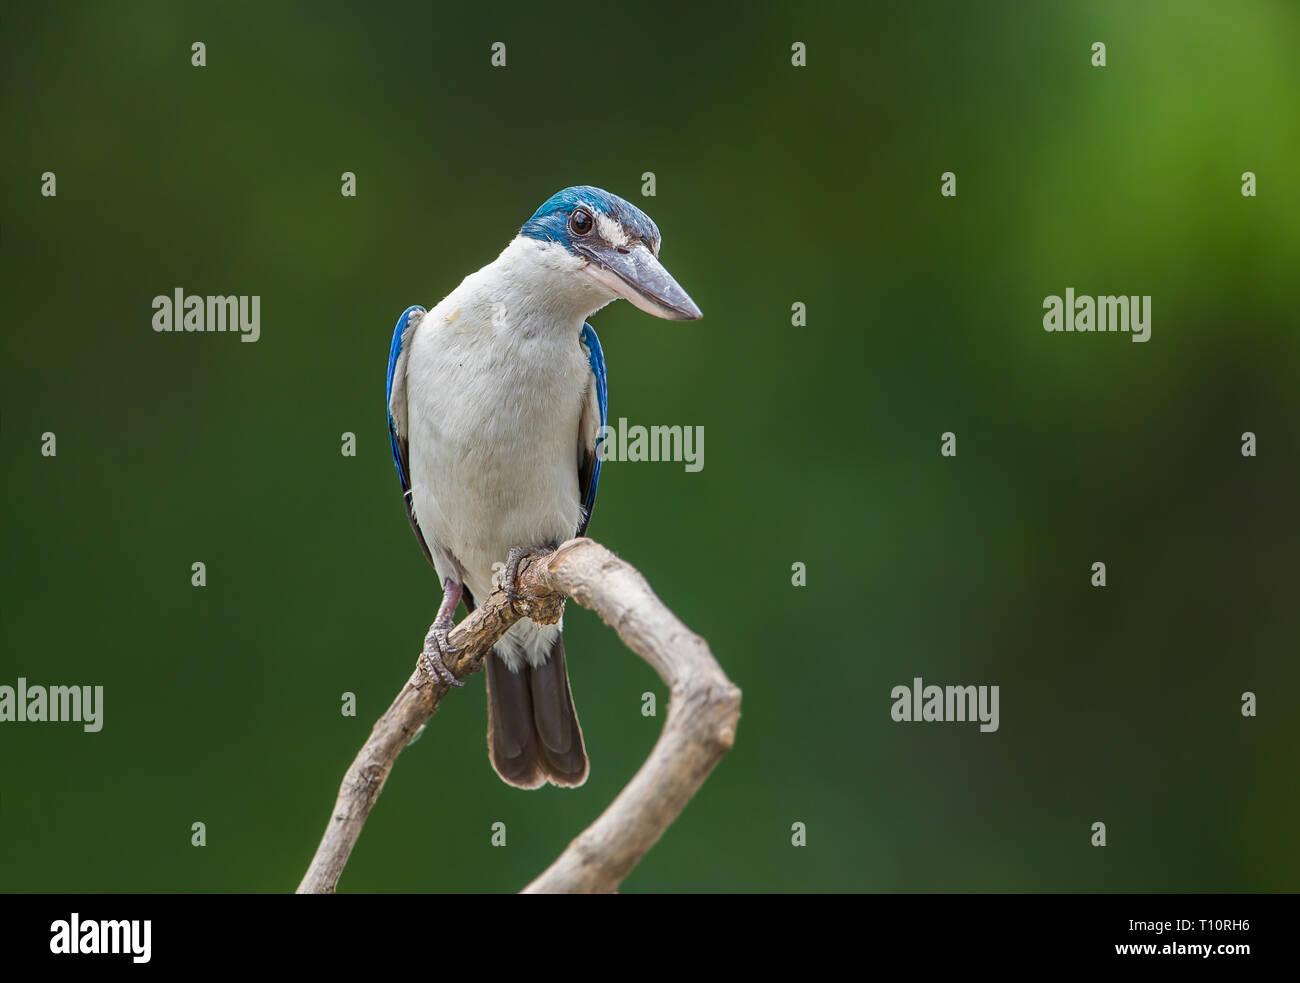 Acciuffato kingfisher, bianco-acciuffato kingfisher, Mangrove kingfisher ( Todiramphus chloris) su un ramo con uno sfondo verde. Foto Stock